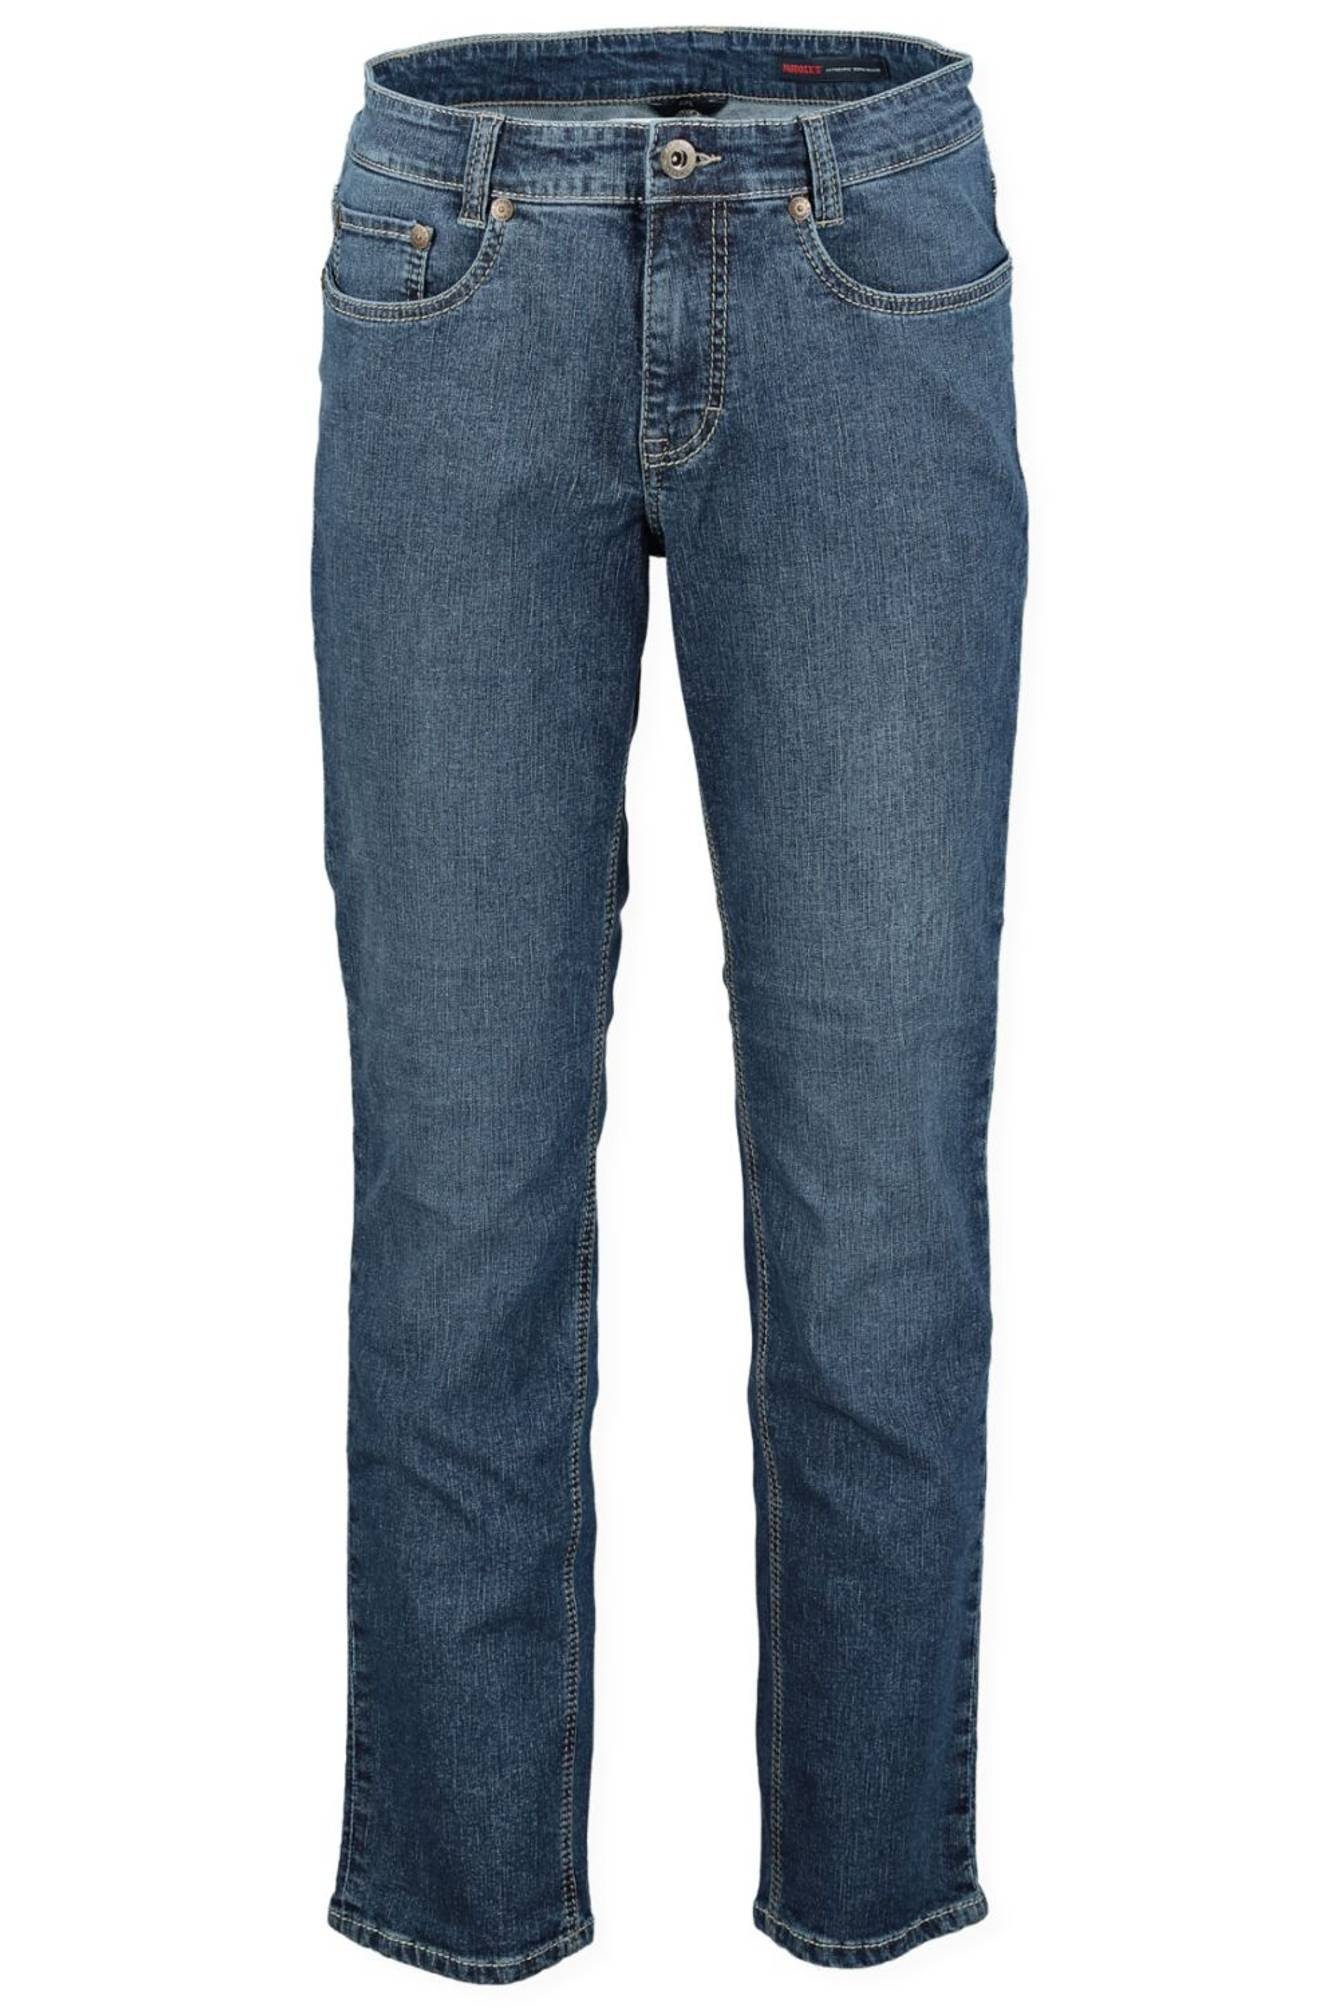 Paddock's 5-Pocket-Jeans 80227 6734 000 mid blue (4349)